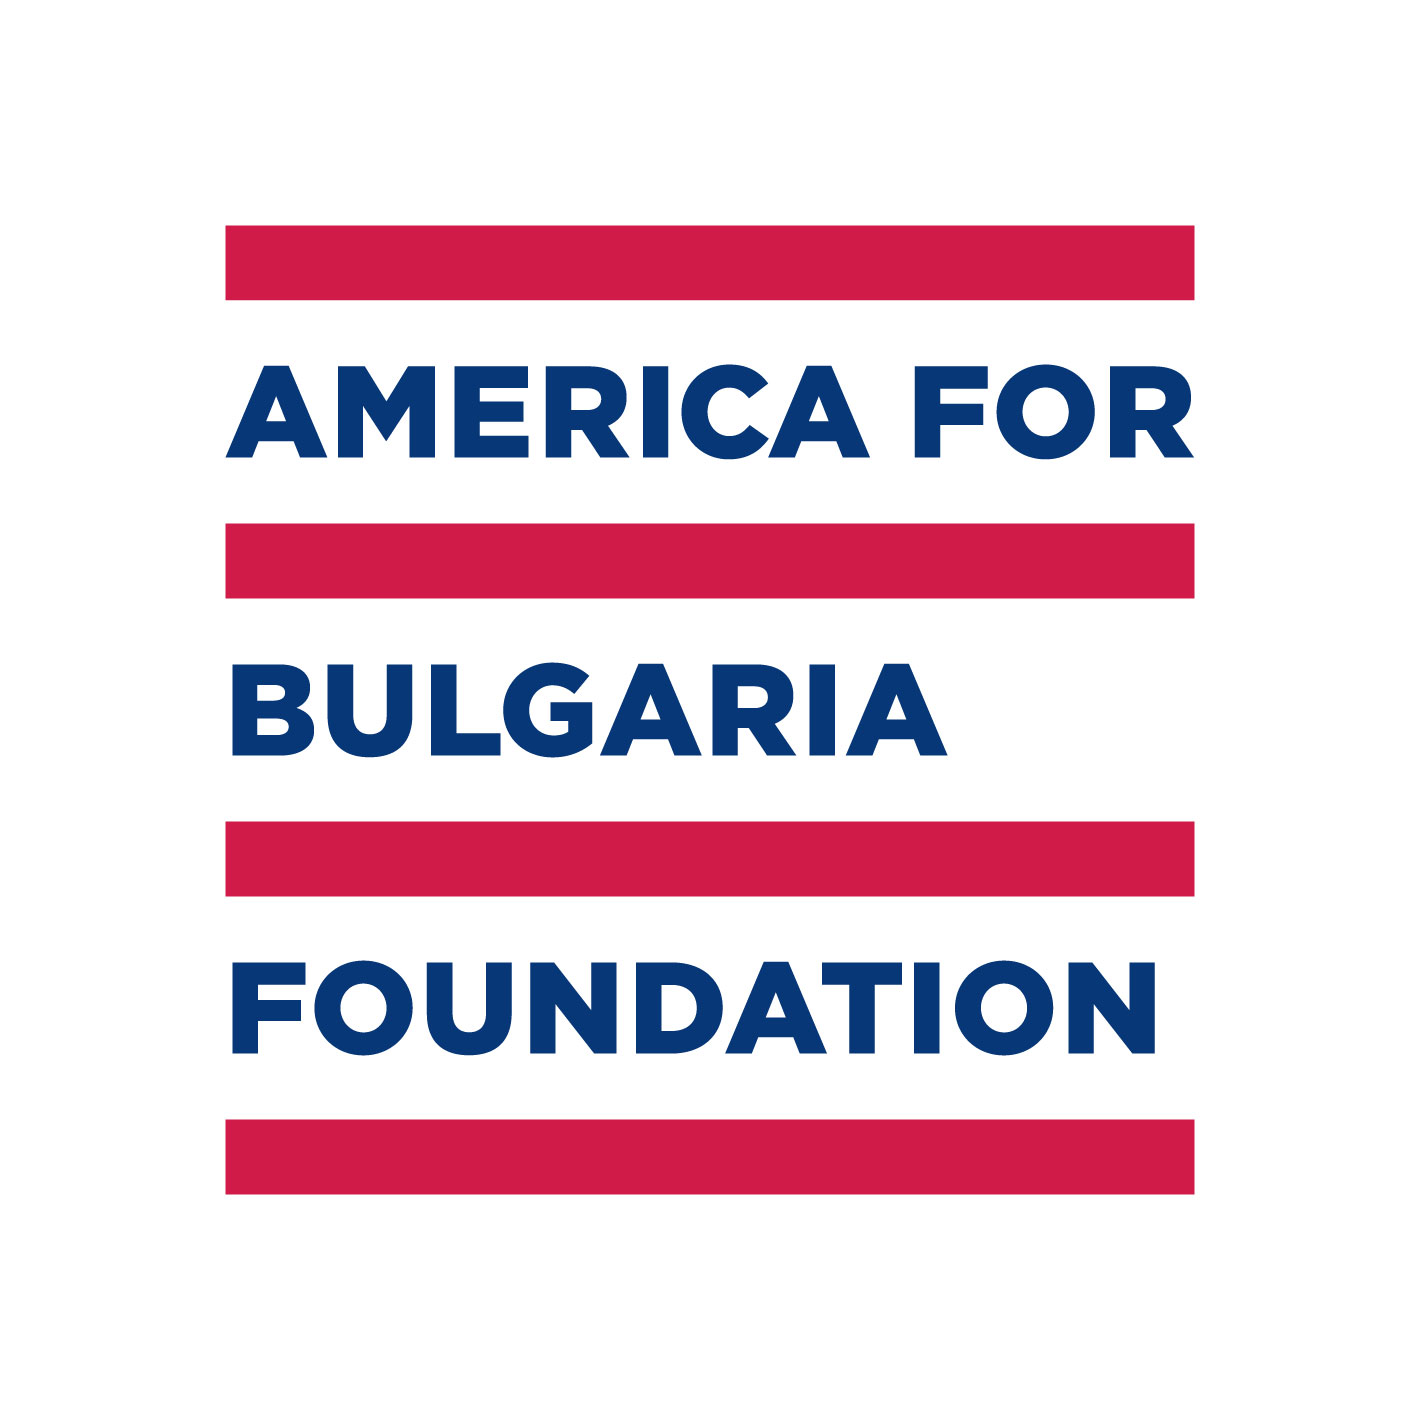 America for Bulgaria Foundation